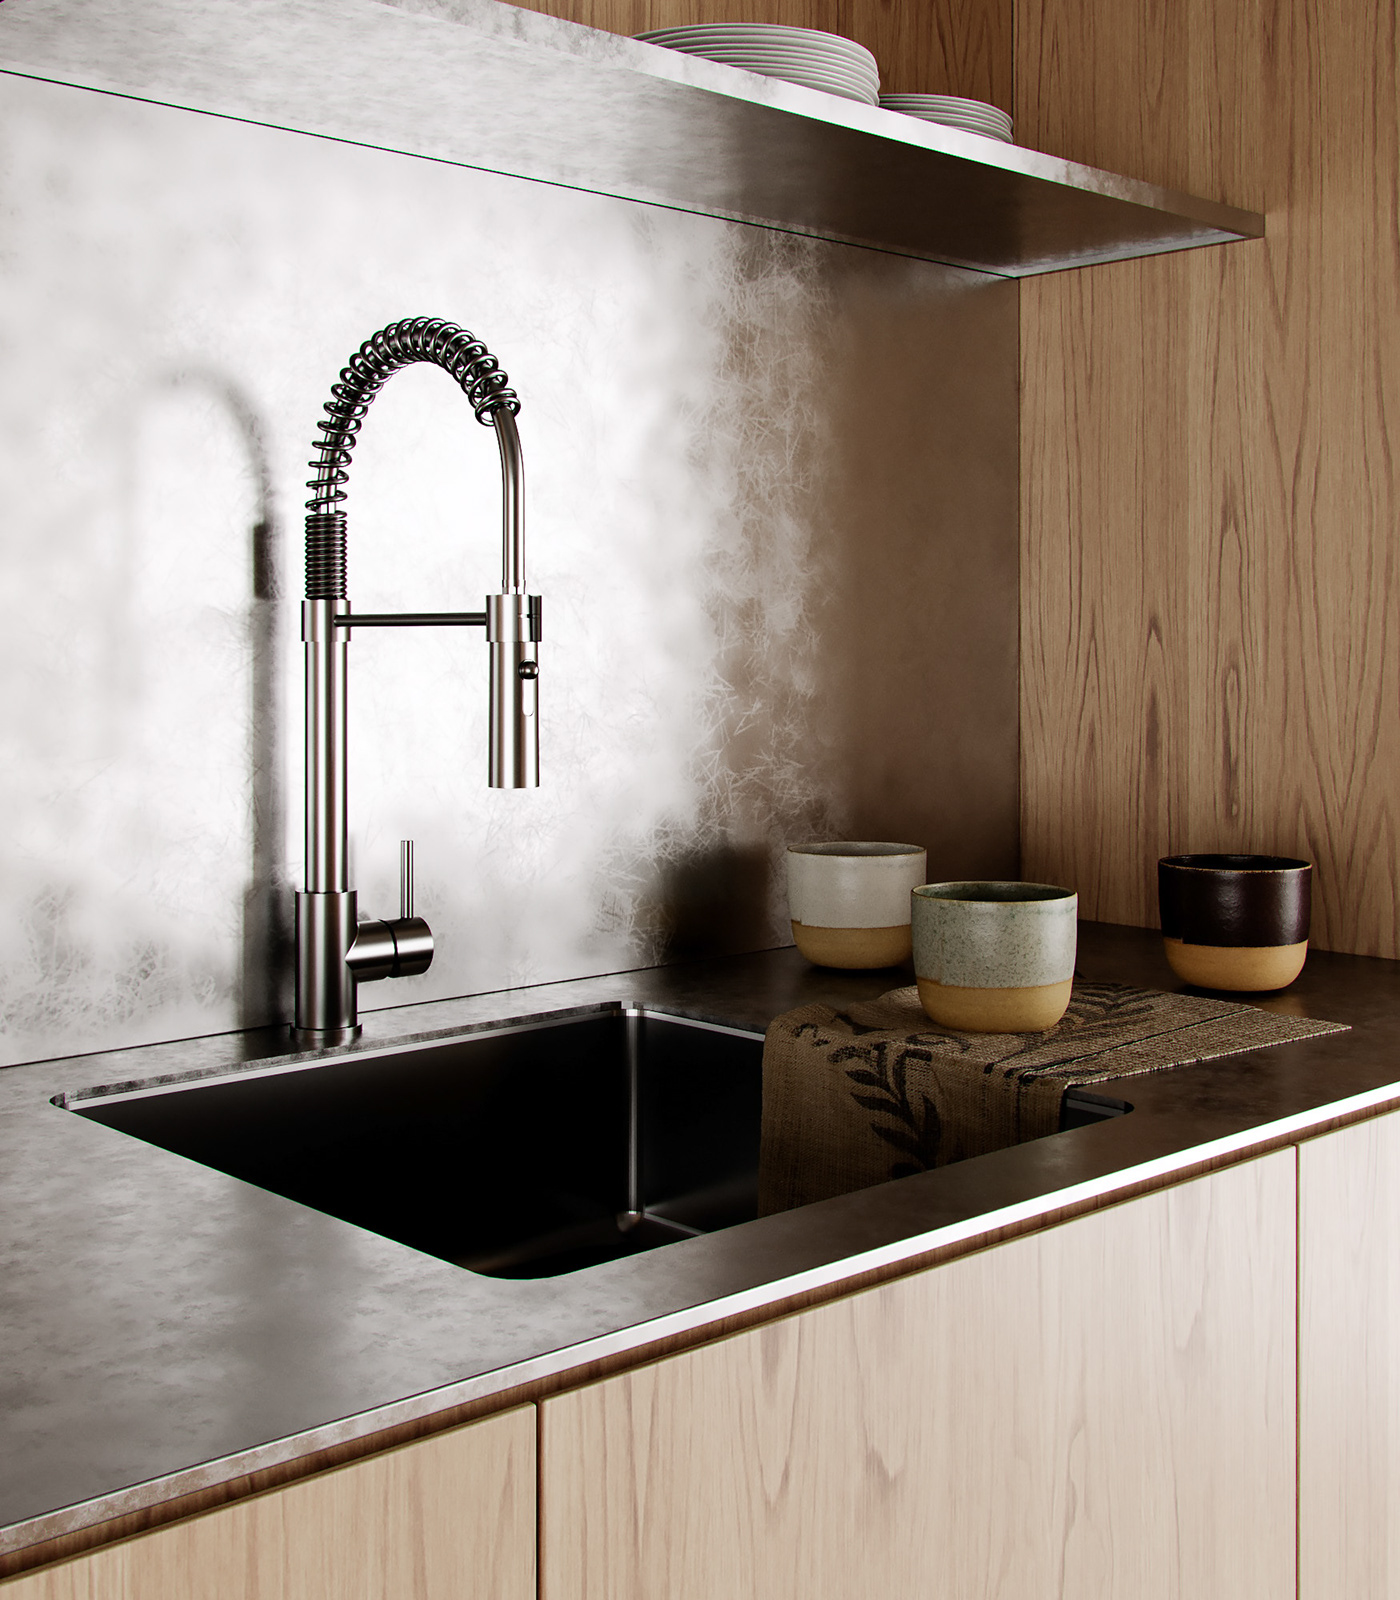 3D CGI cinema 4d corona render  interior design  kitchen nordic visualization warm wood